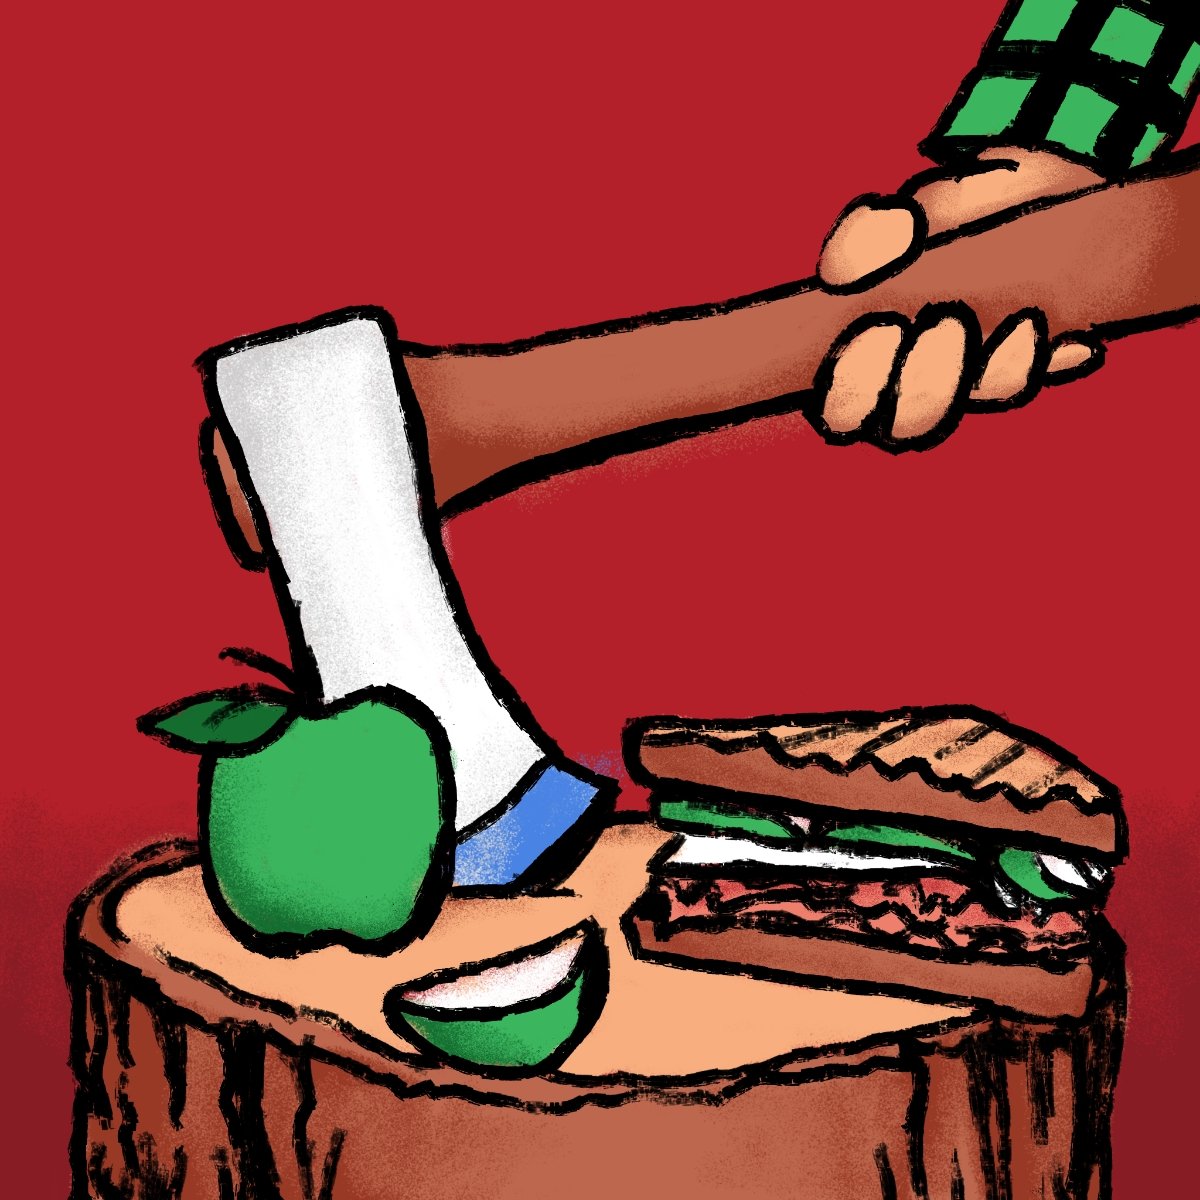 The Vermont sandwich illustration